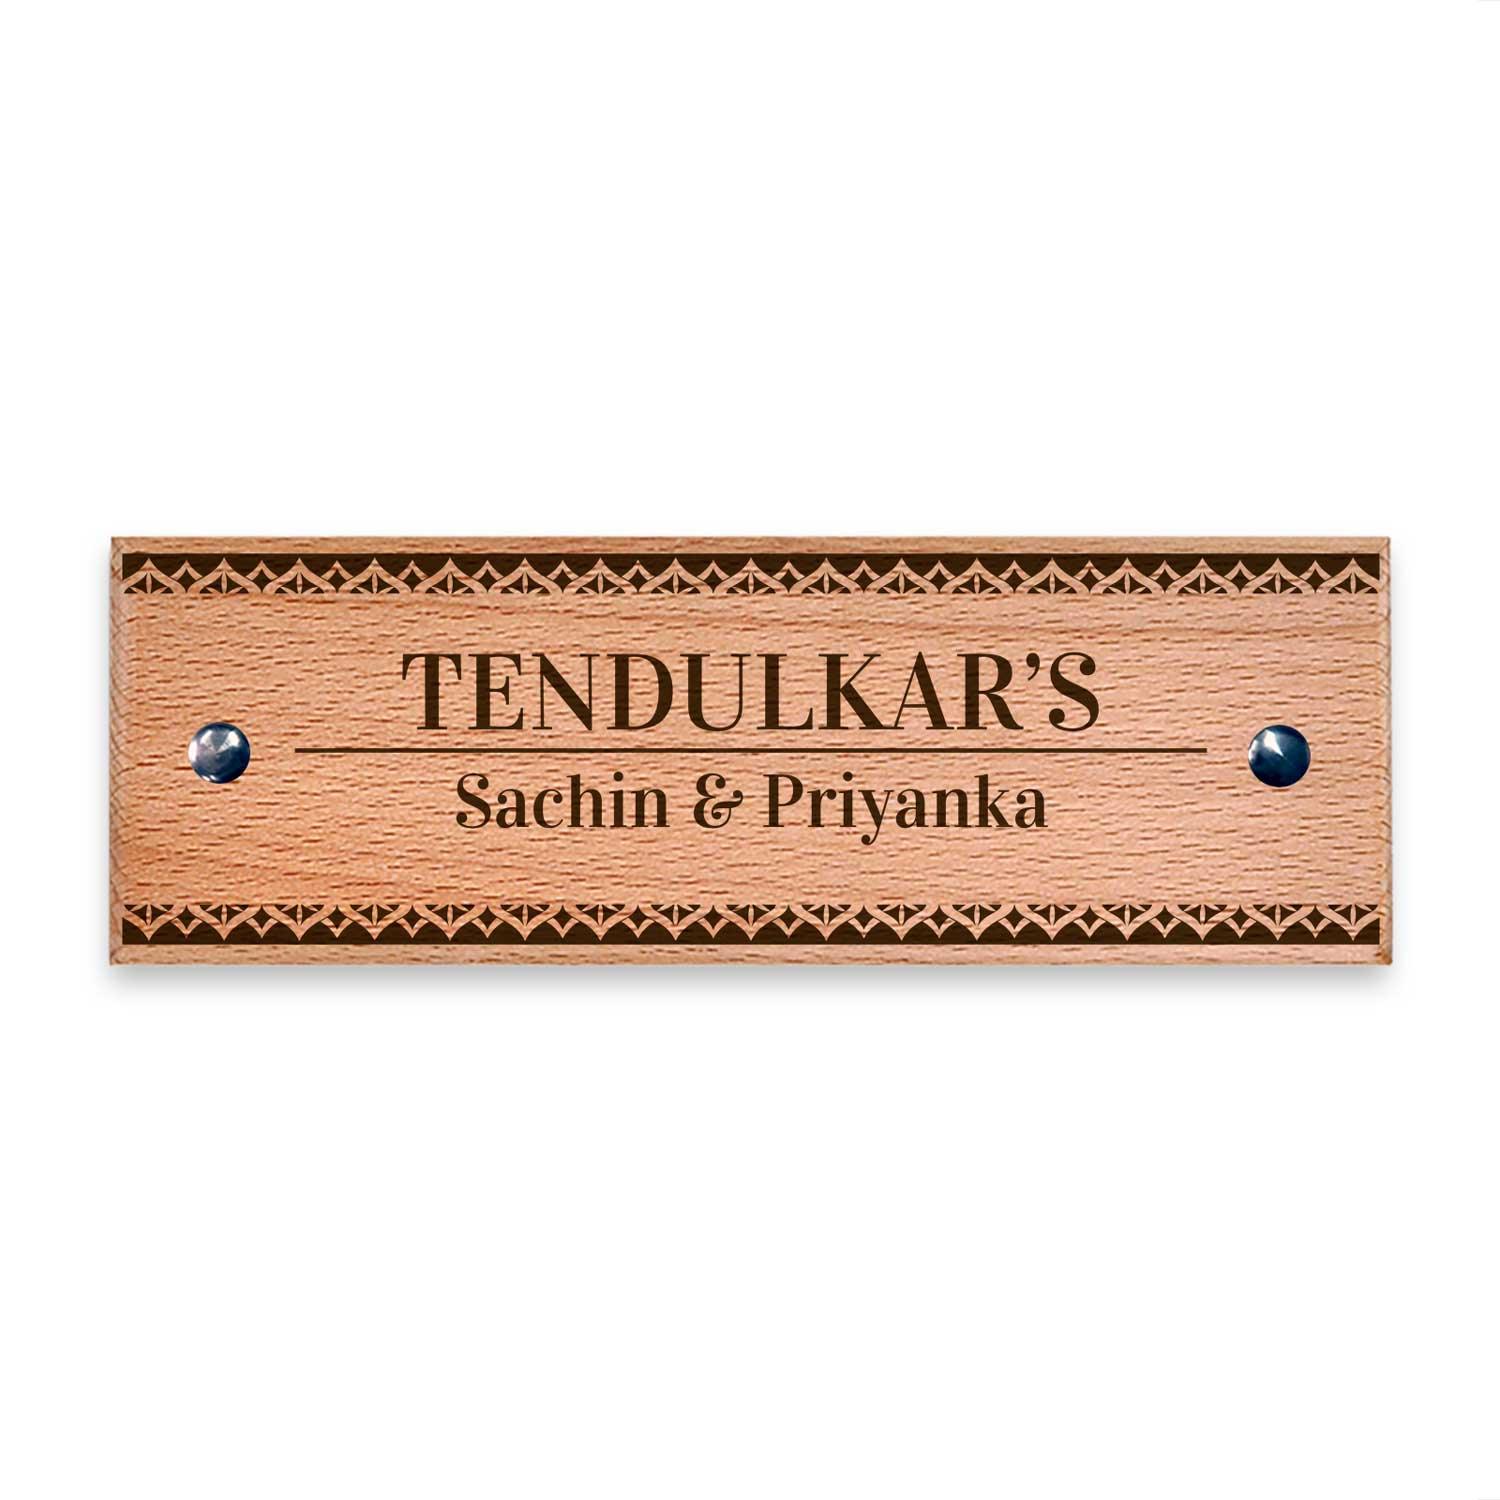 Kinara (Madhubani) - Wooden Name Plate - Housenama